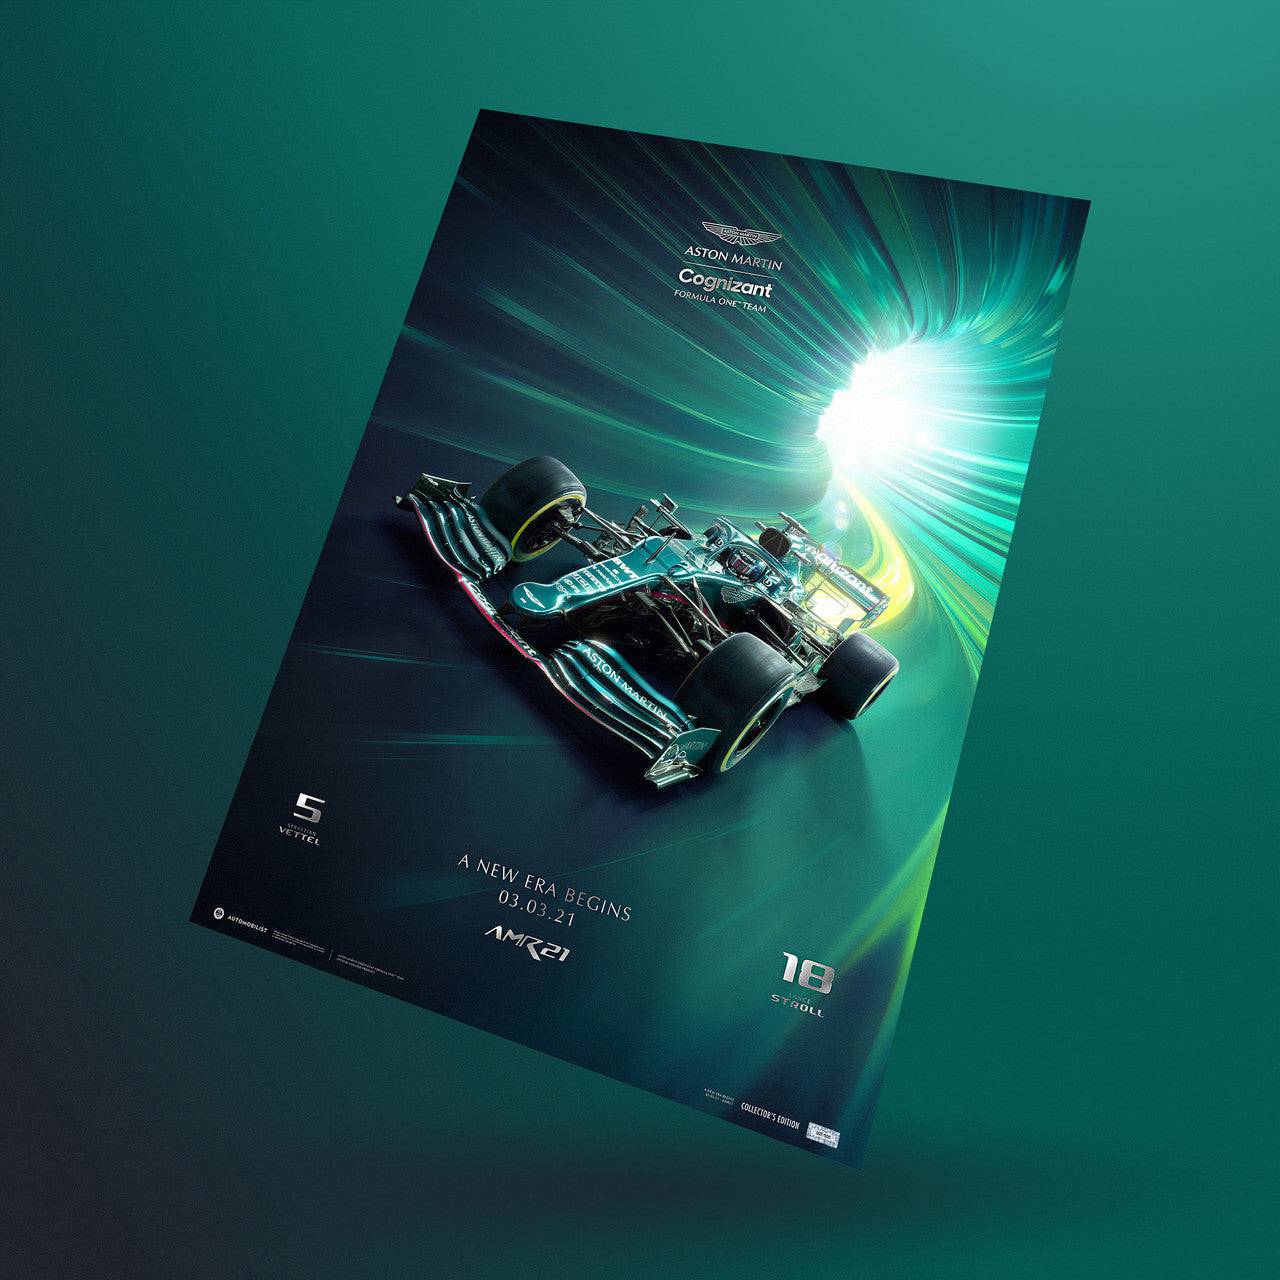 Aston Martin Cognizant Formula One™ Team - A New Era Begins - 2021 | Collector’s Edition